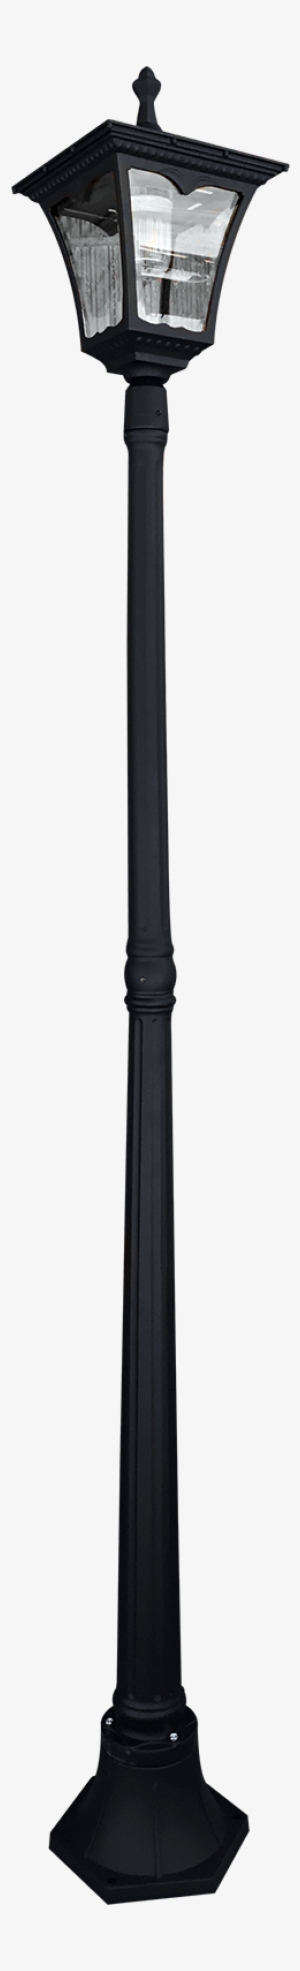 Sesame Street Light Pole Png - Lamp Post